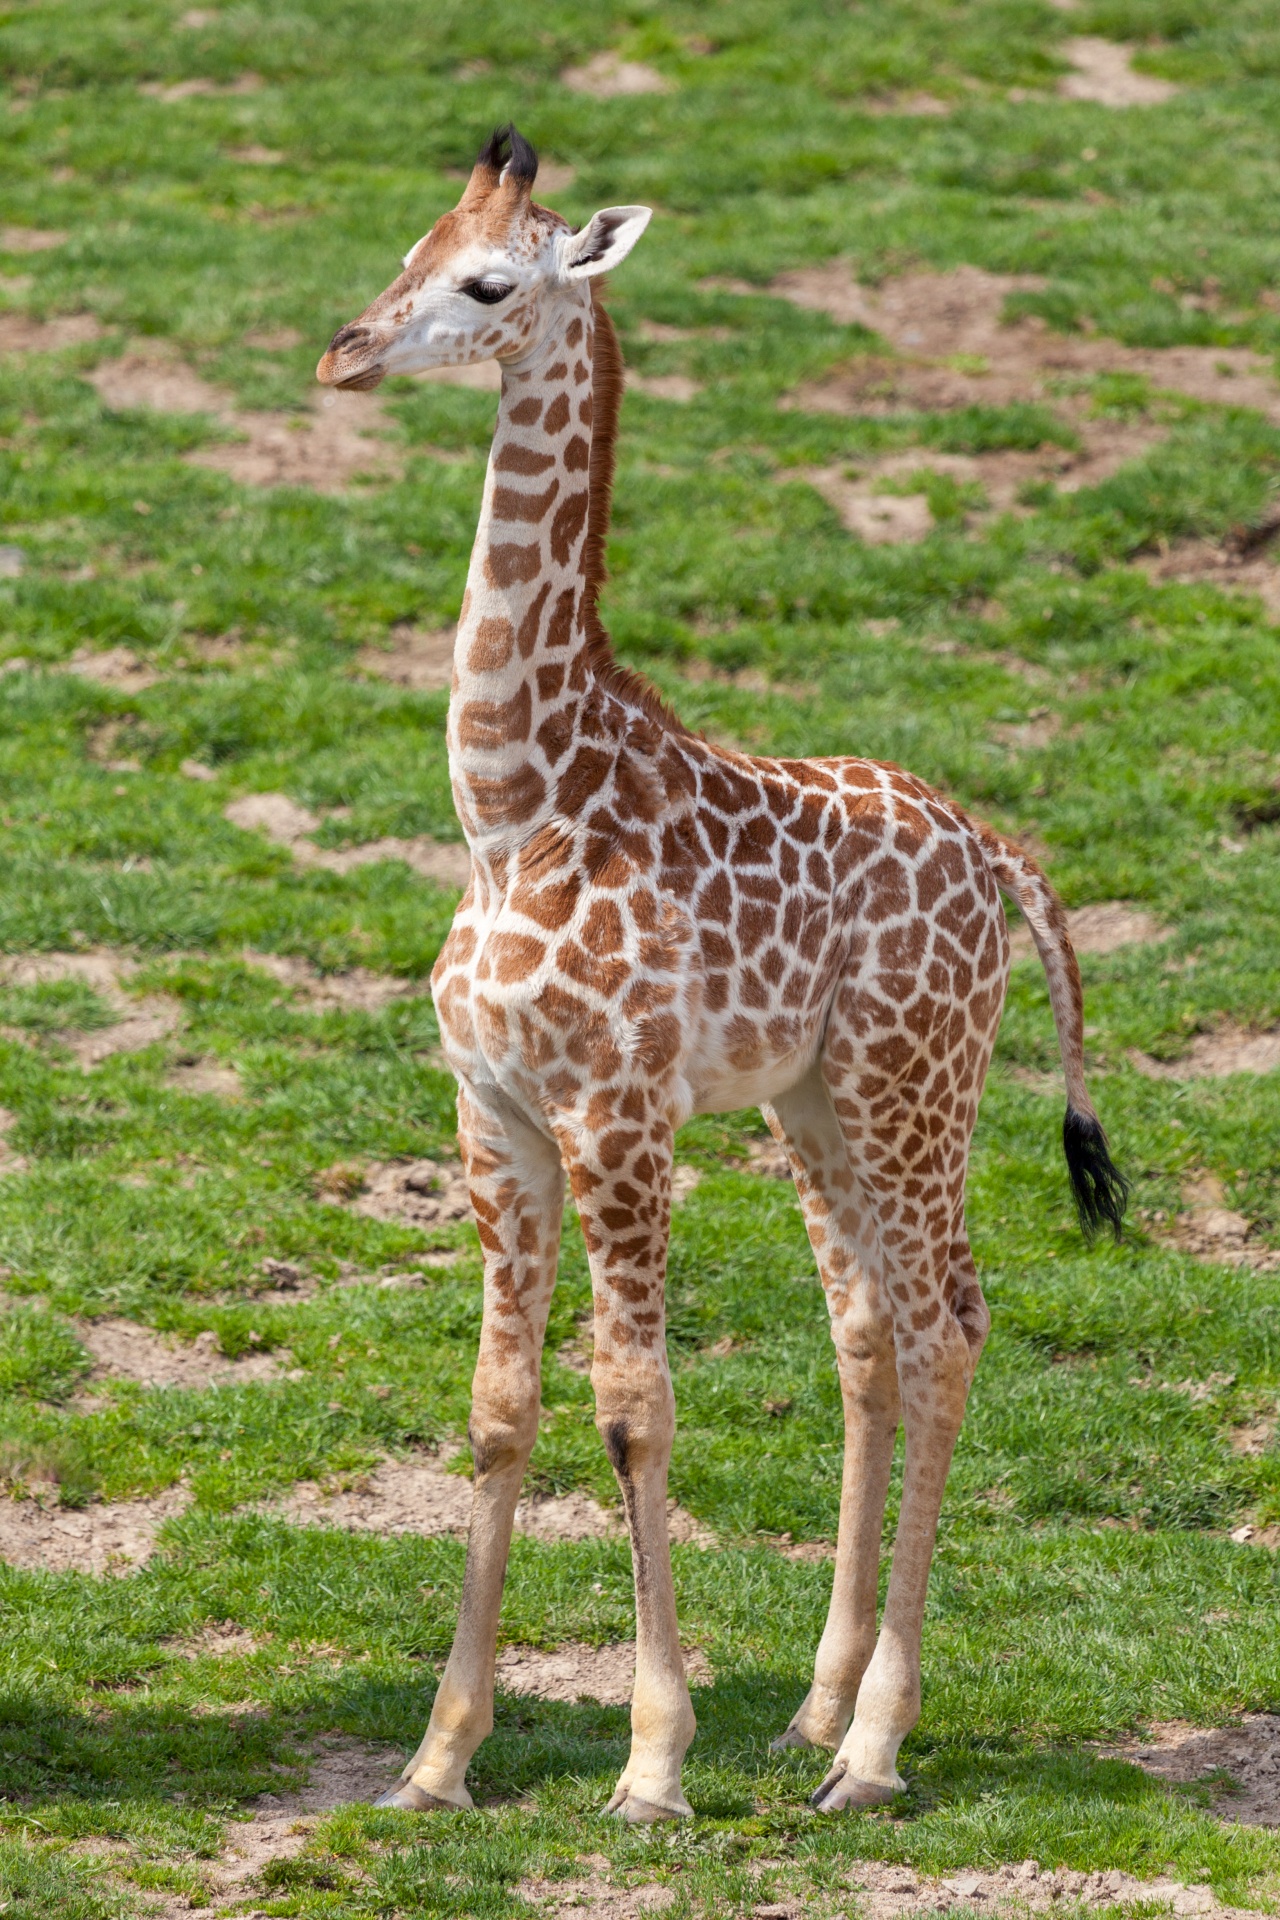 Baby giraffe standing on the grass